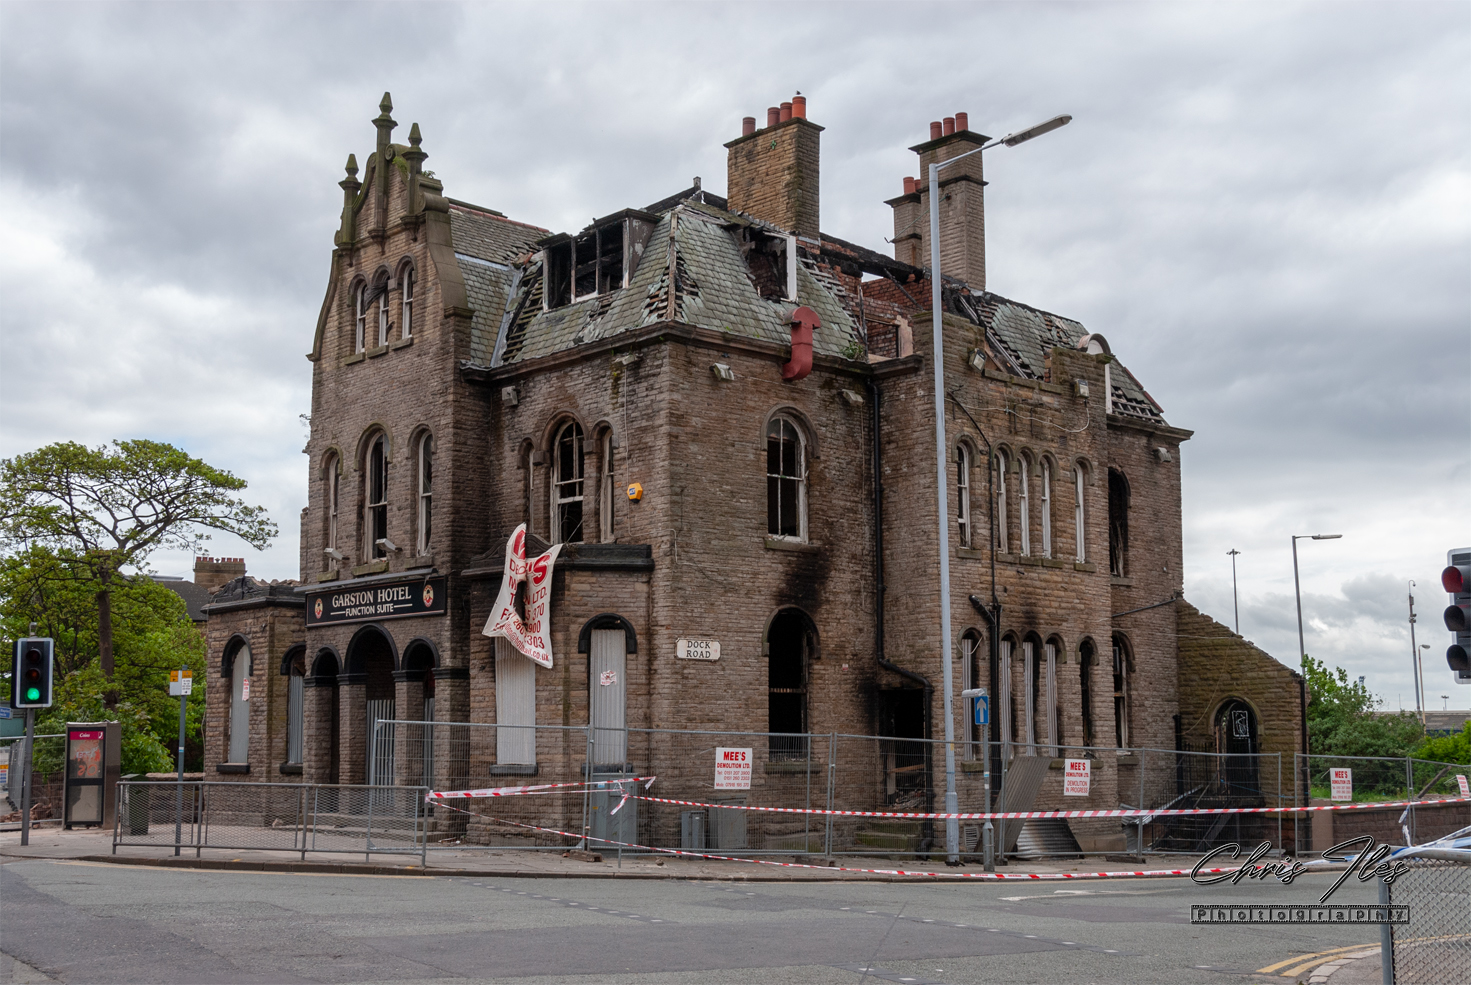 Demolition of the Former ‘Garston Hotel’